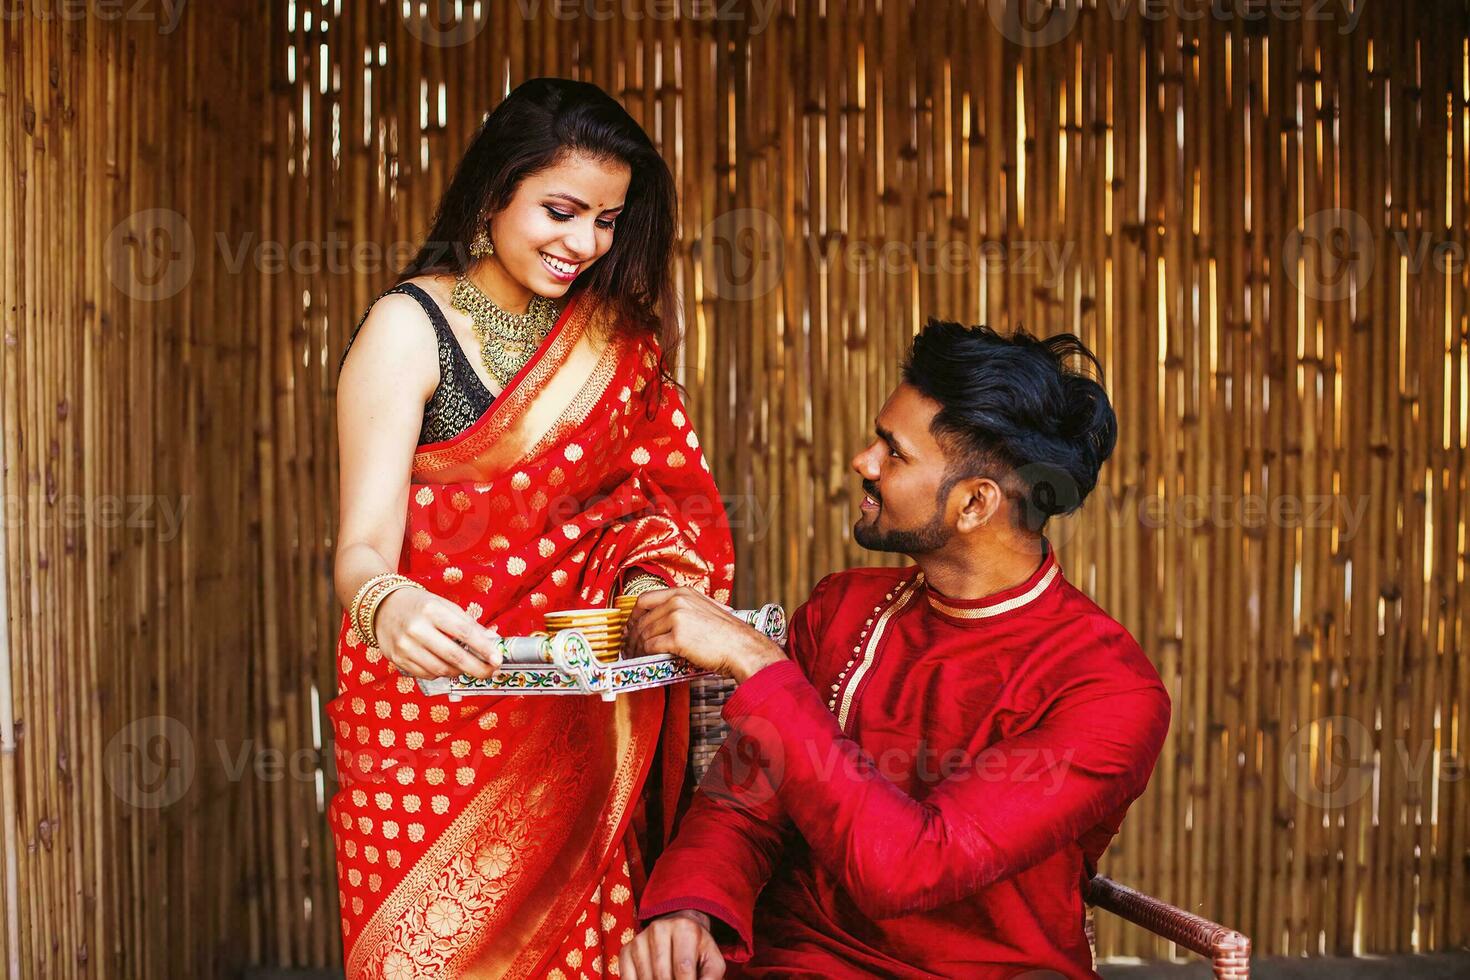 indian wedding photography in delhi photo